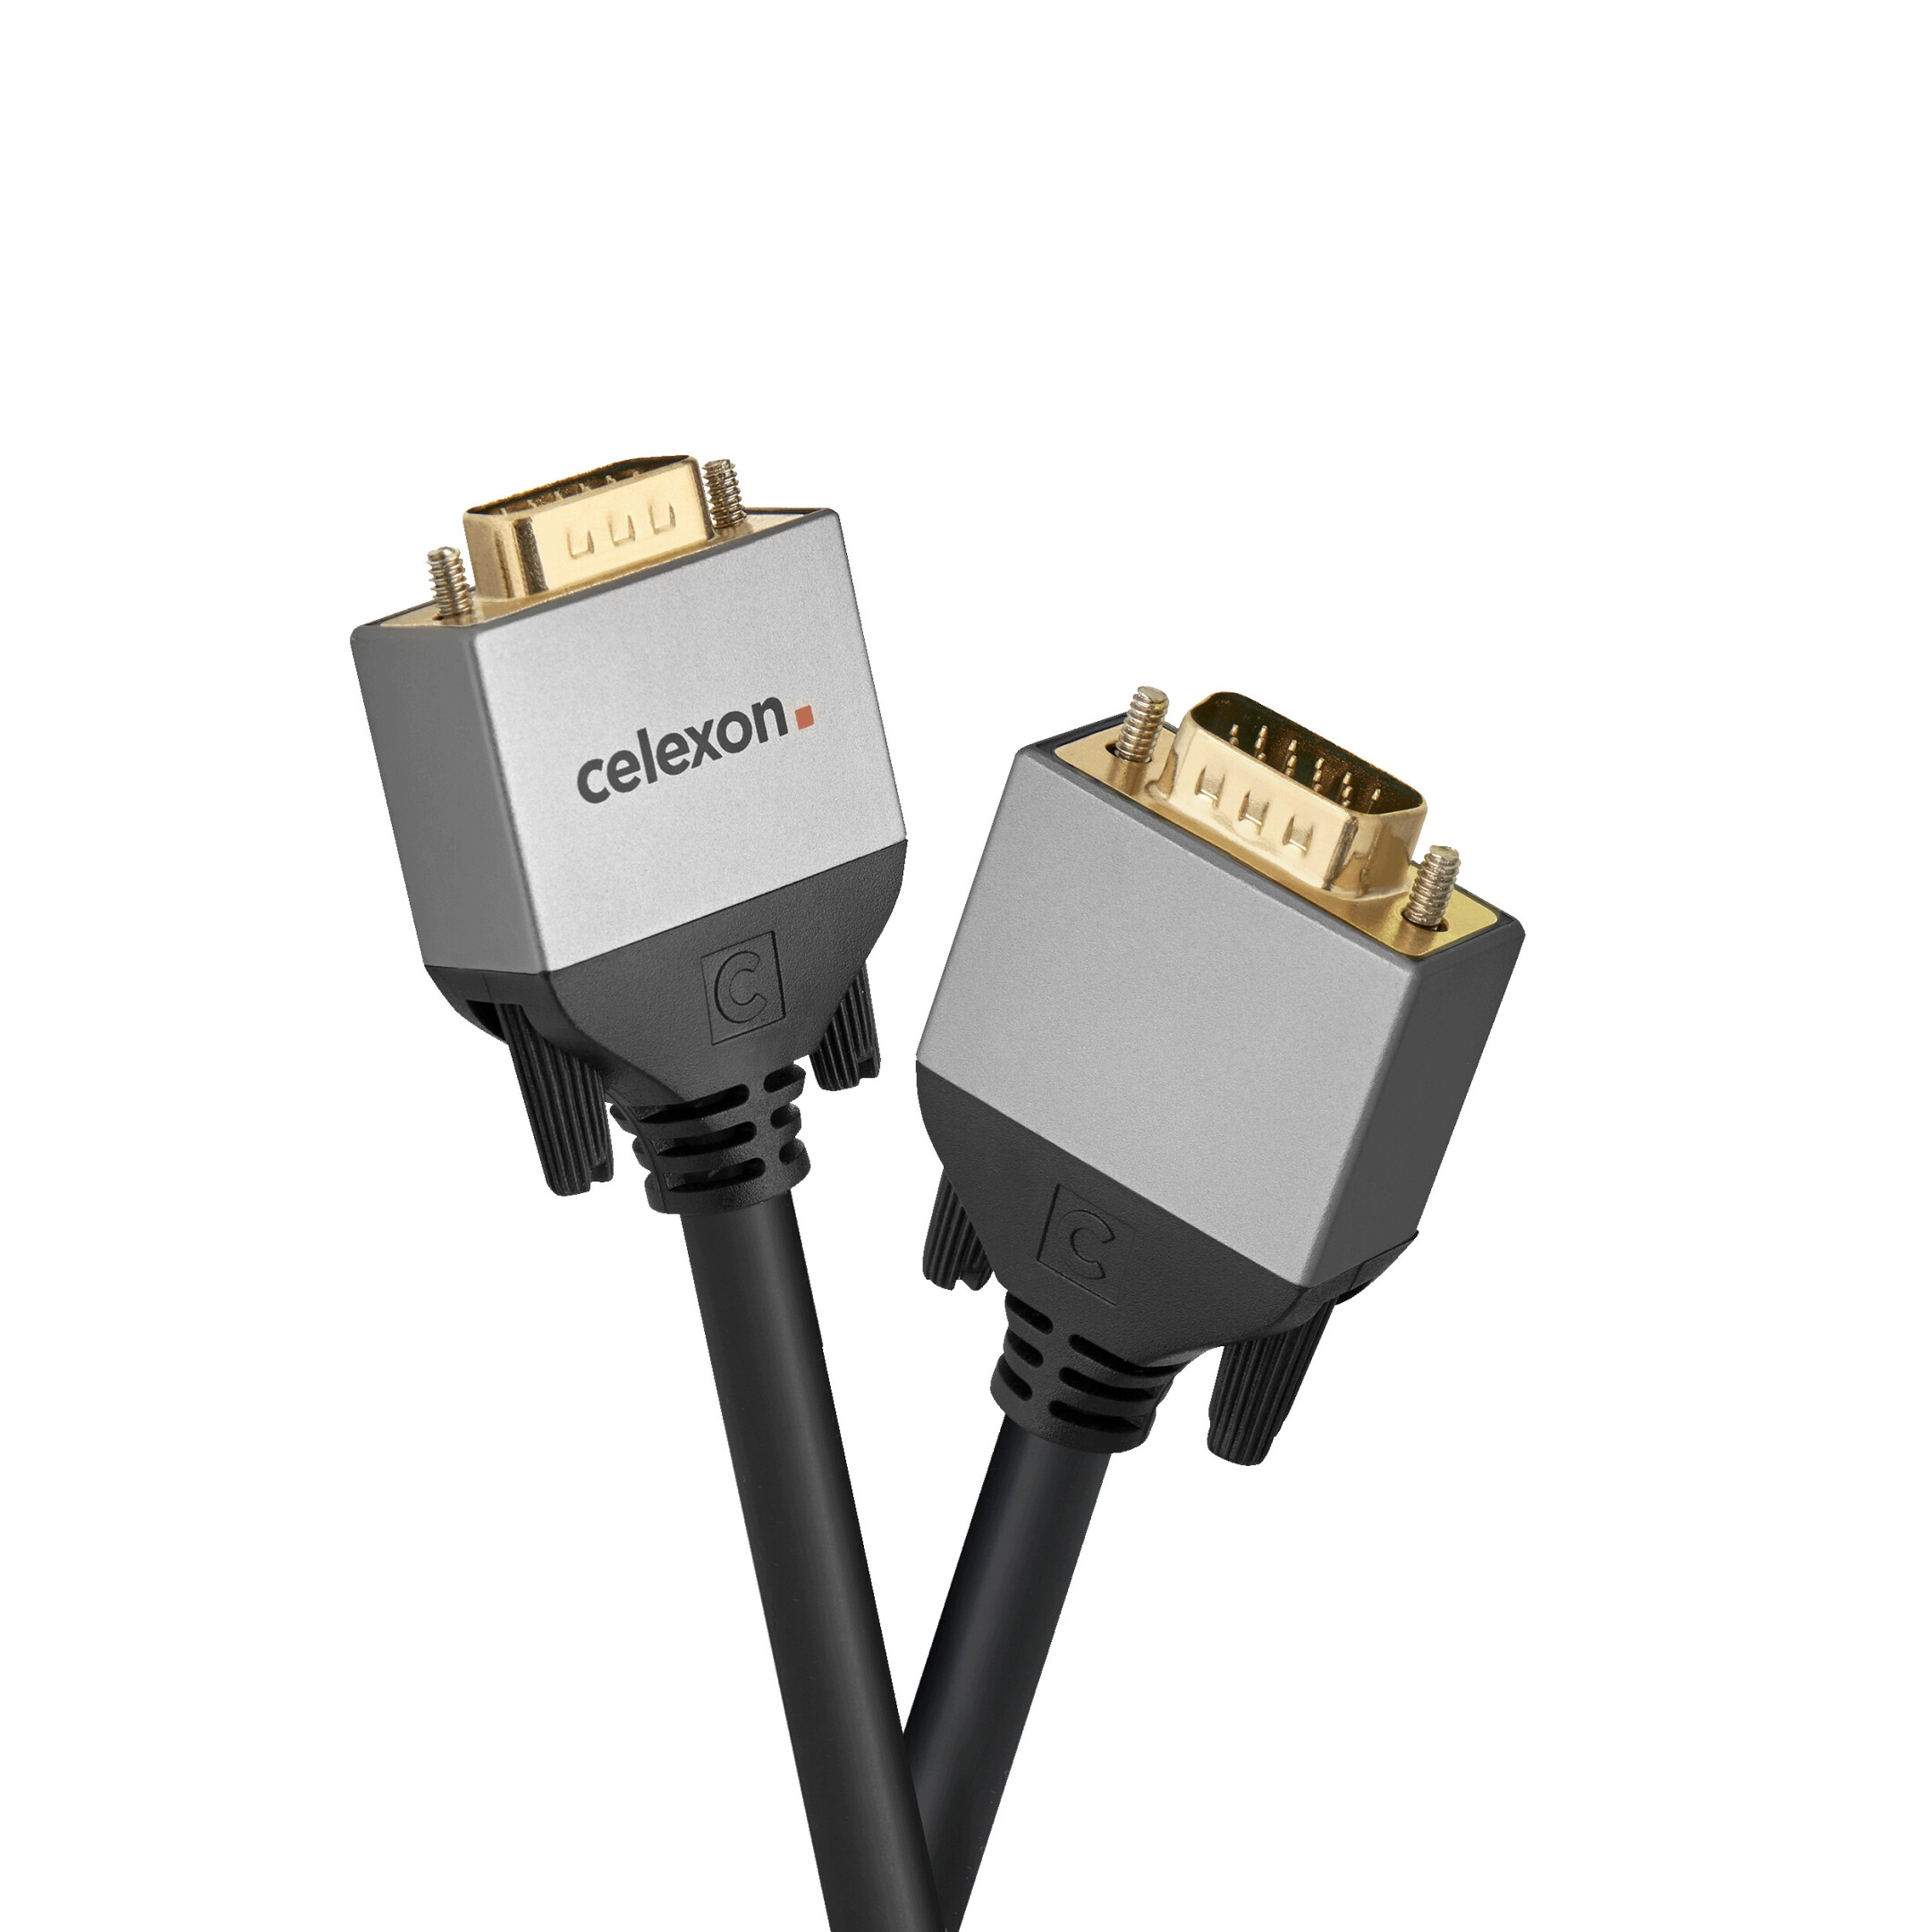 celexon-VGA-Kabel-1-0m-Professional-Line